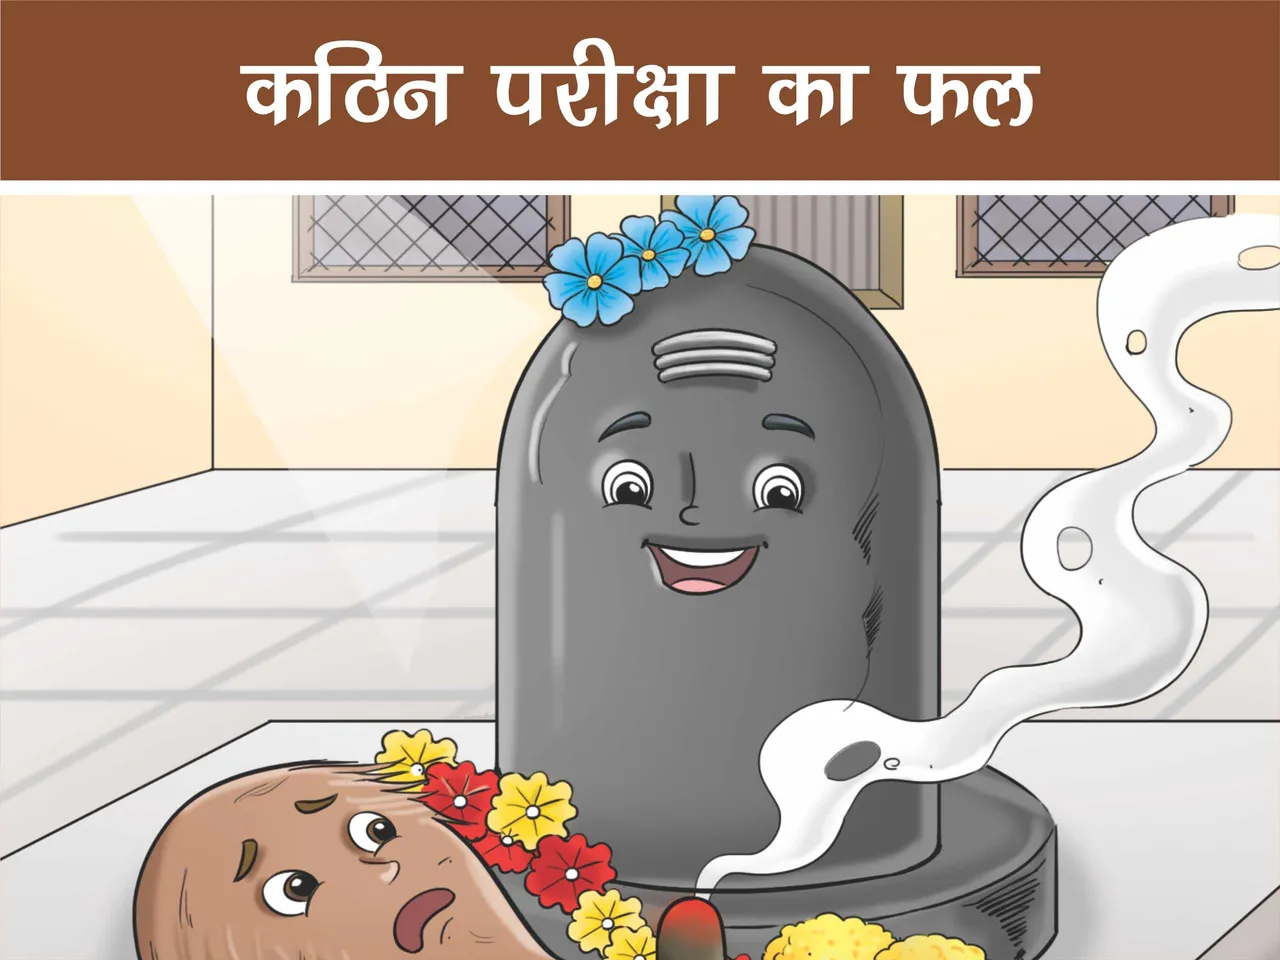 Lord shiva and coconut cartoon image